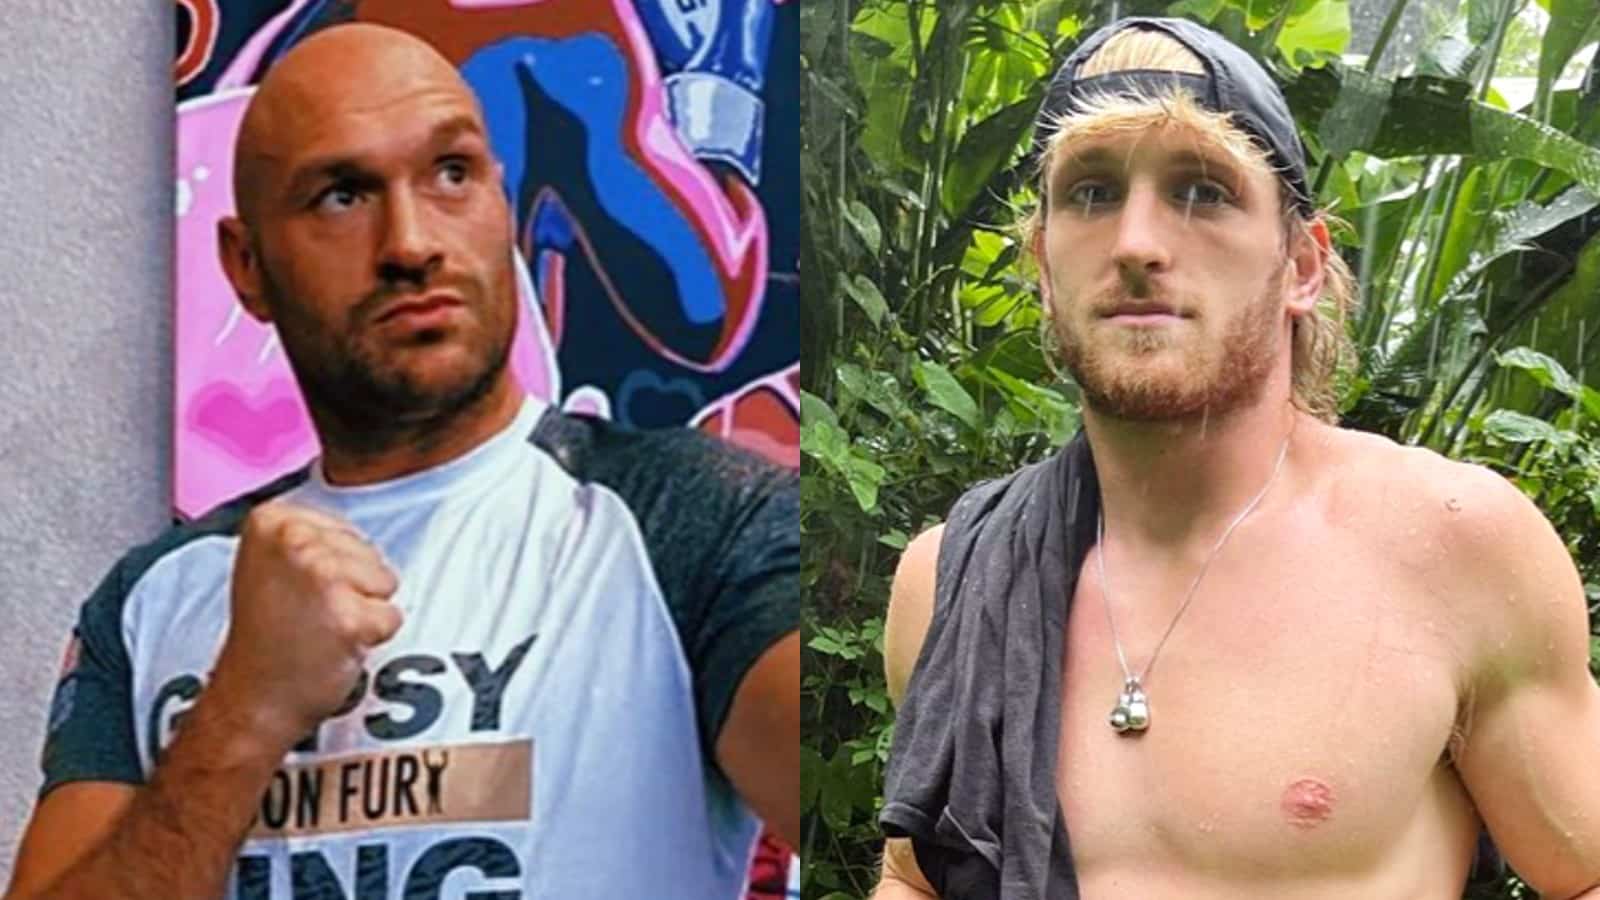 Image of Logan Paul next to image of Tyson Fury